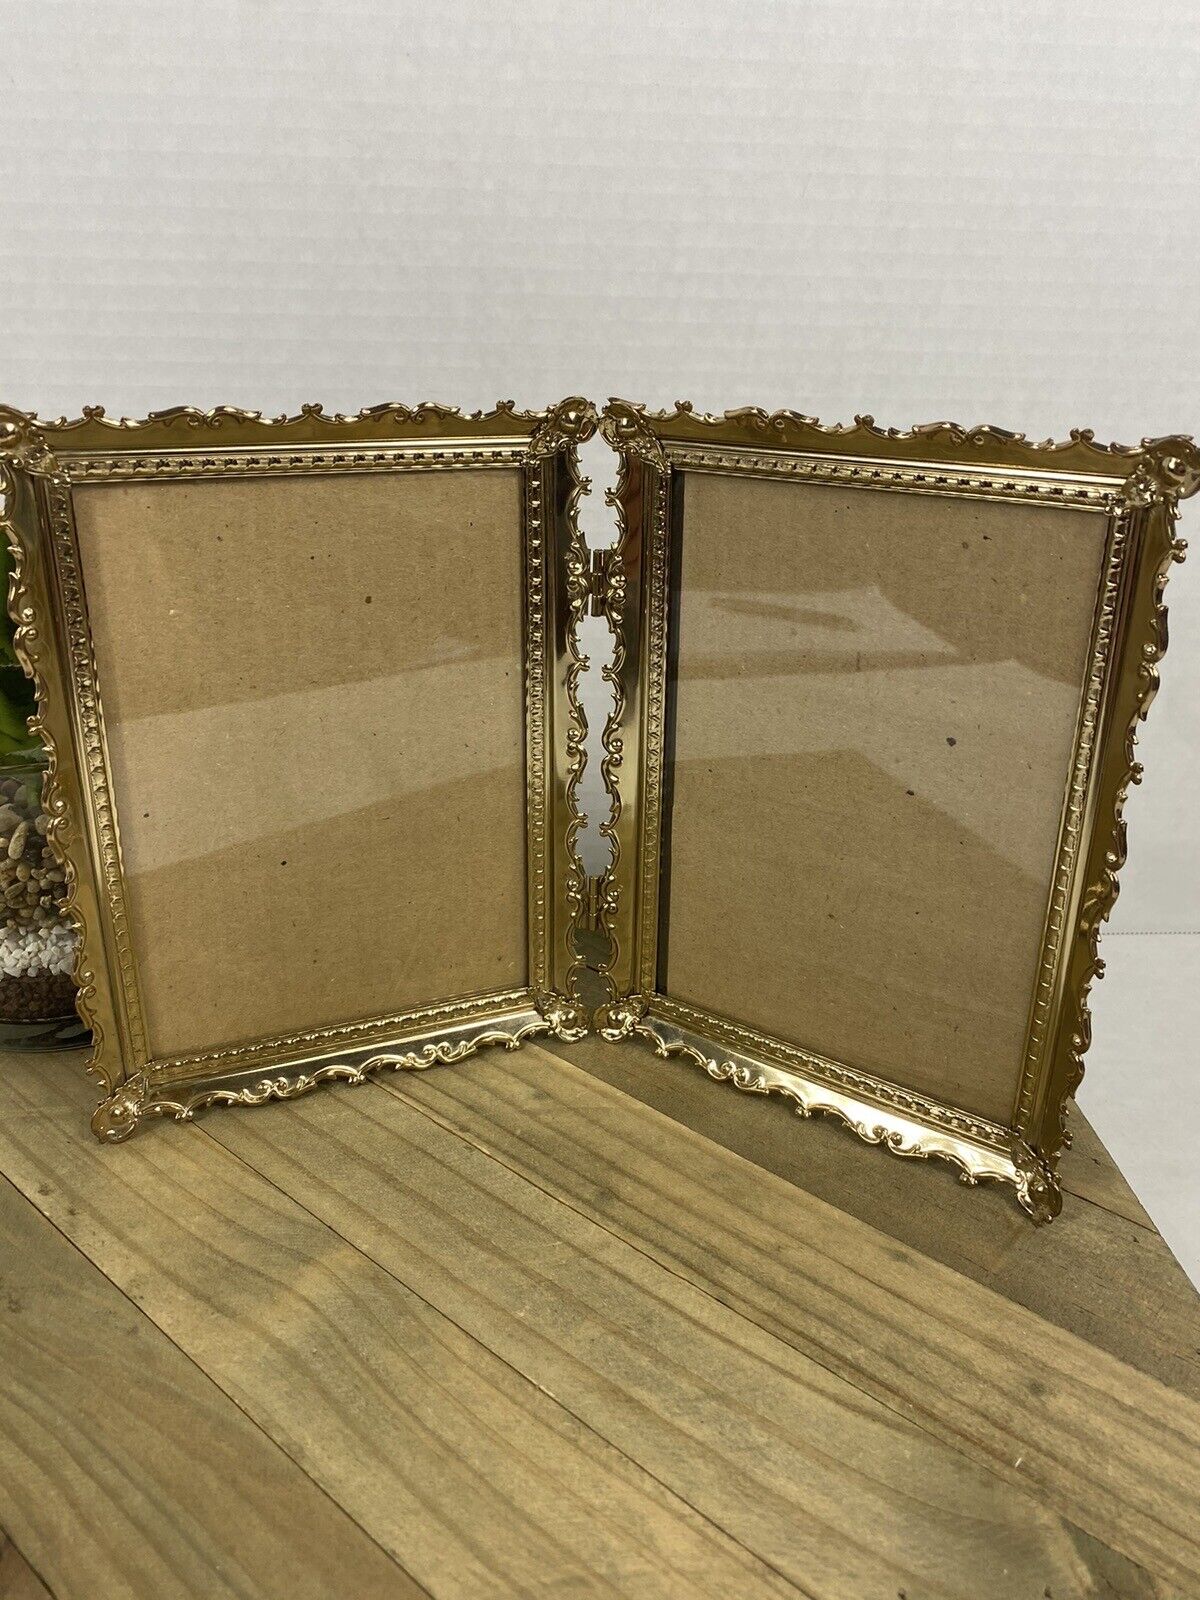 Gold Tone Ornate MCM Frames 6.5 X 4.5 Victorian Art Deco Romantic